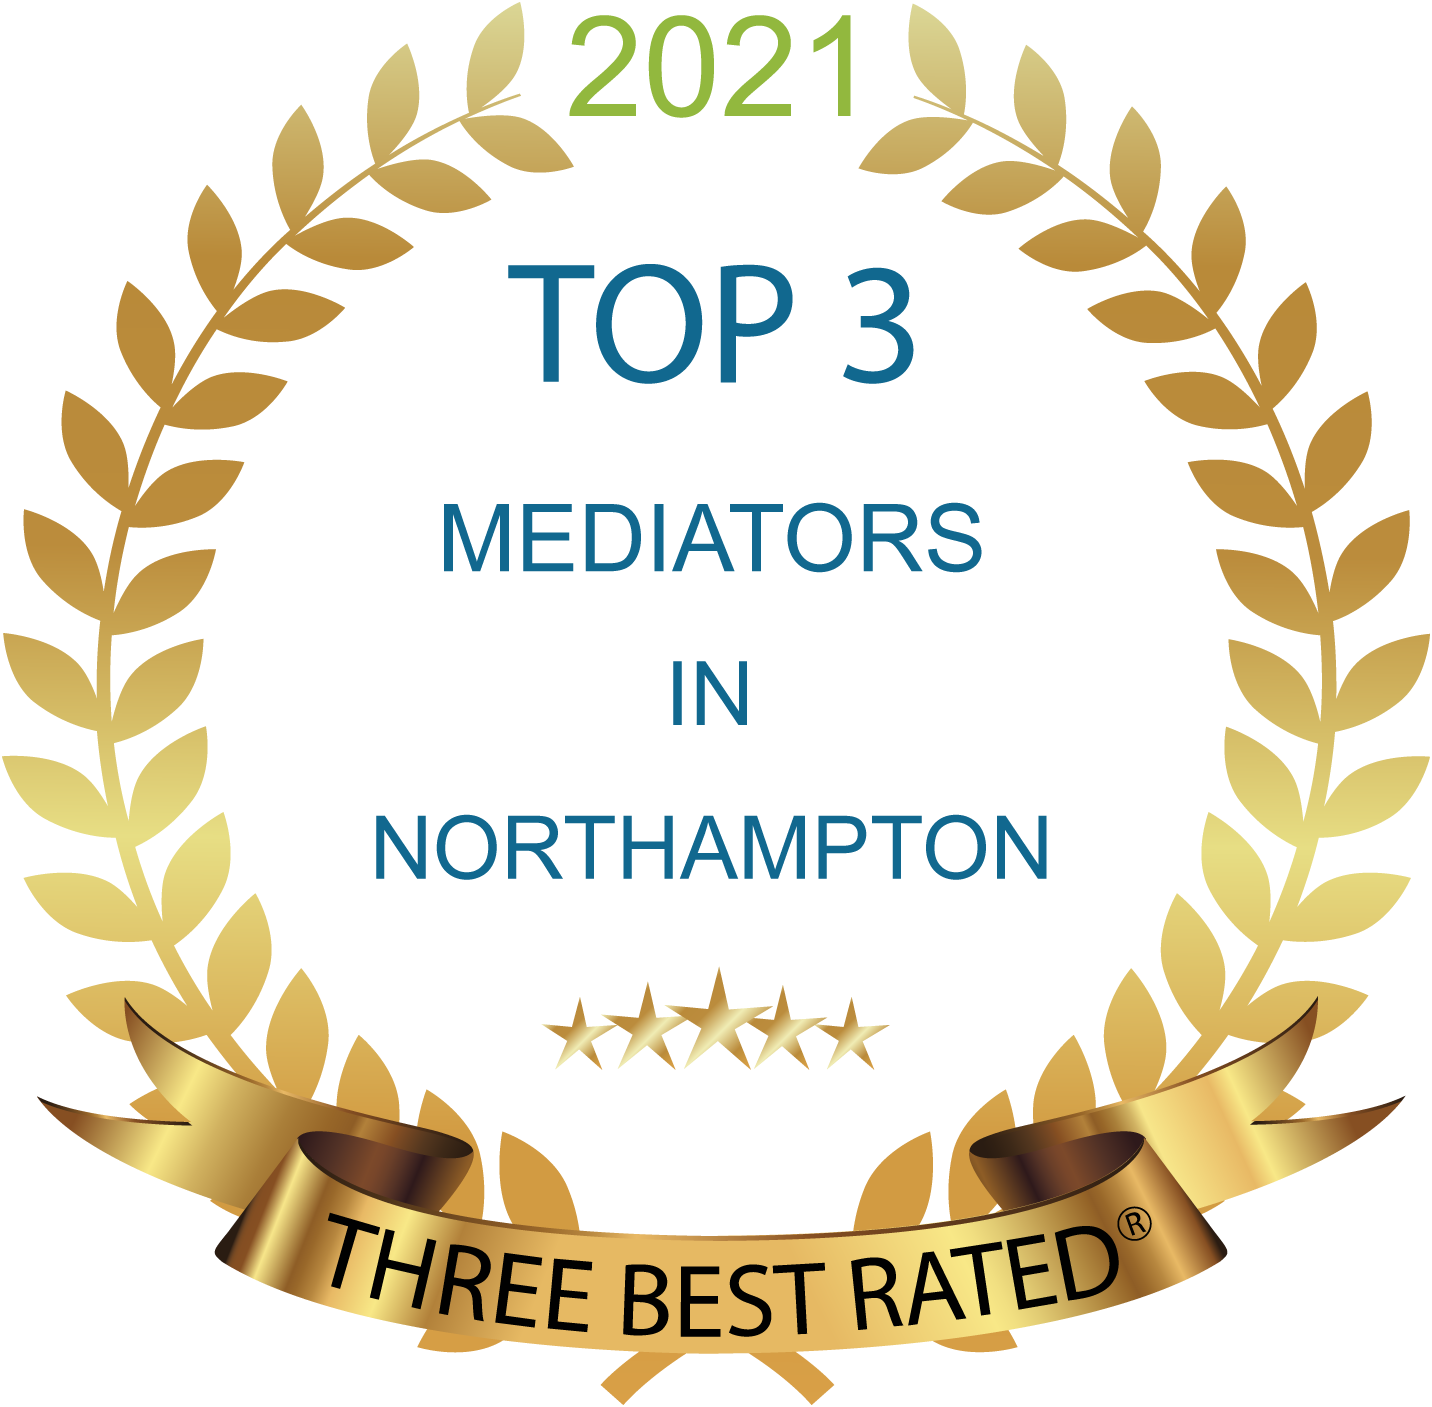 Top 2 Mediators in Northampton 2021